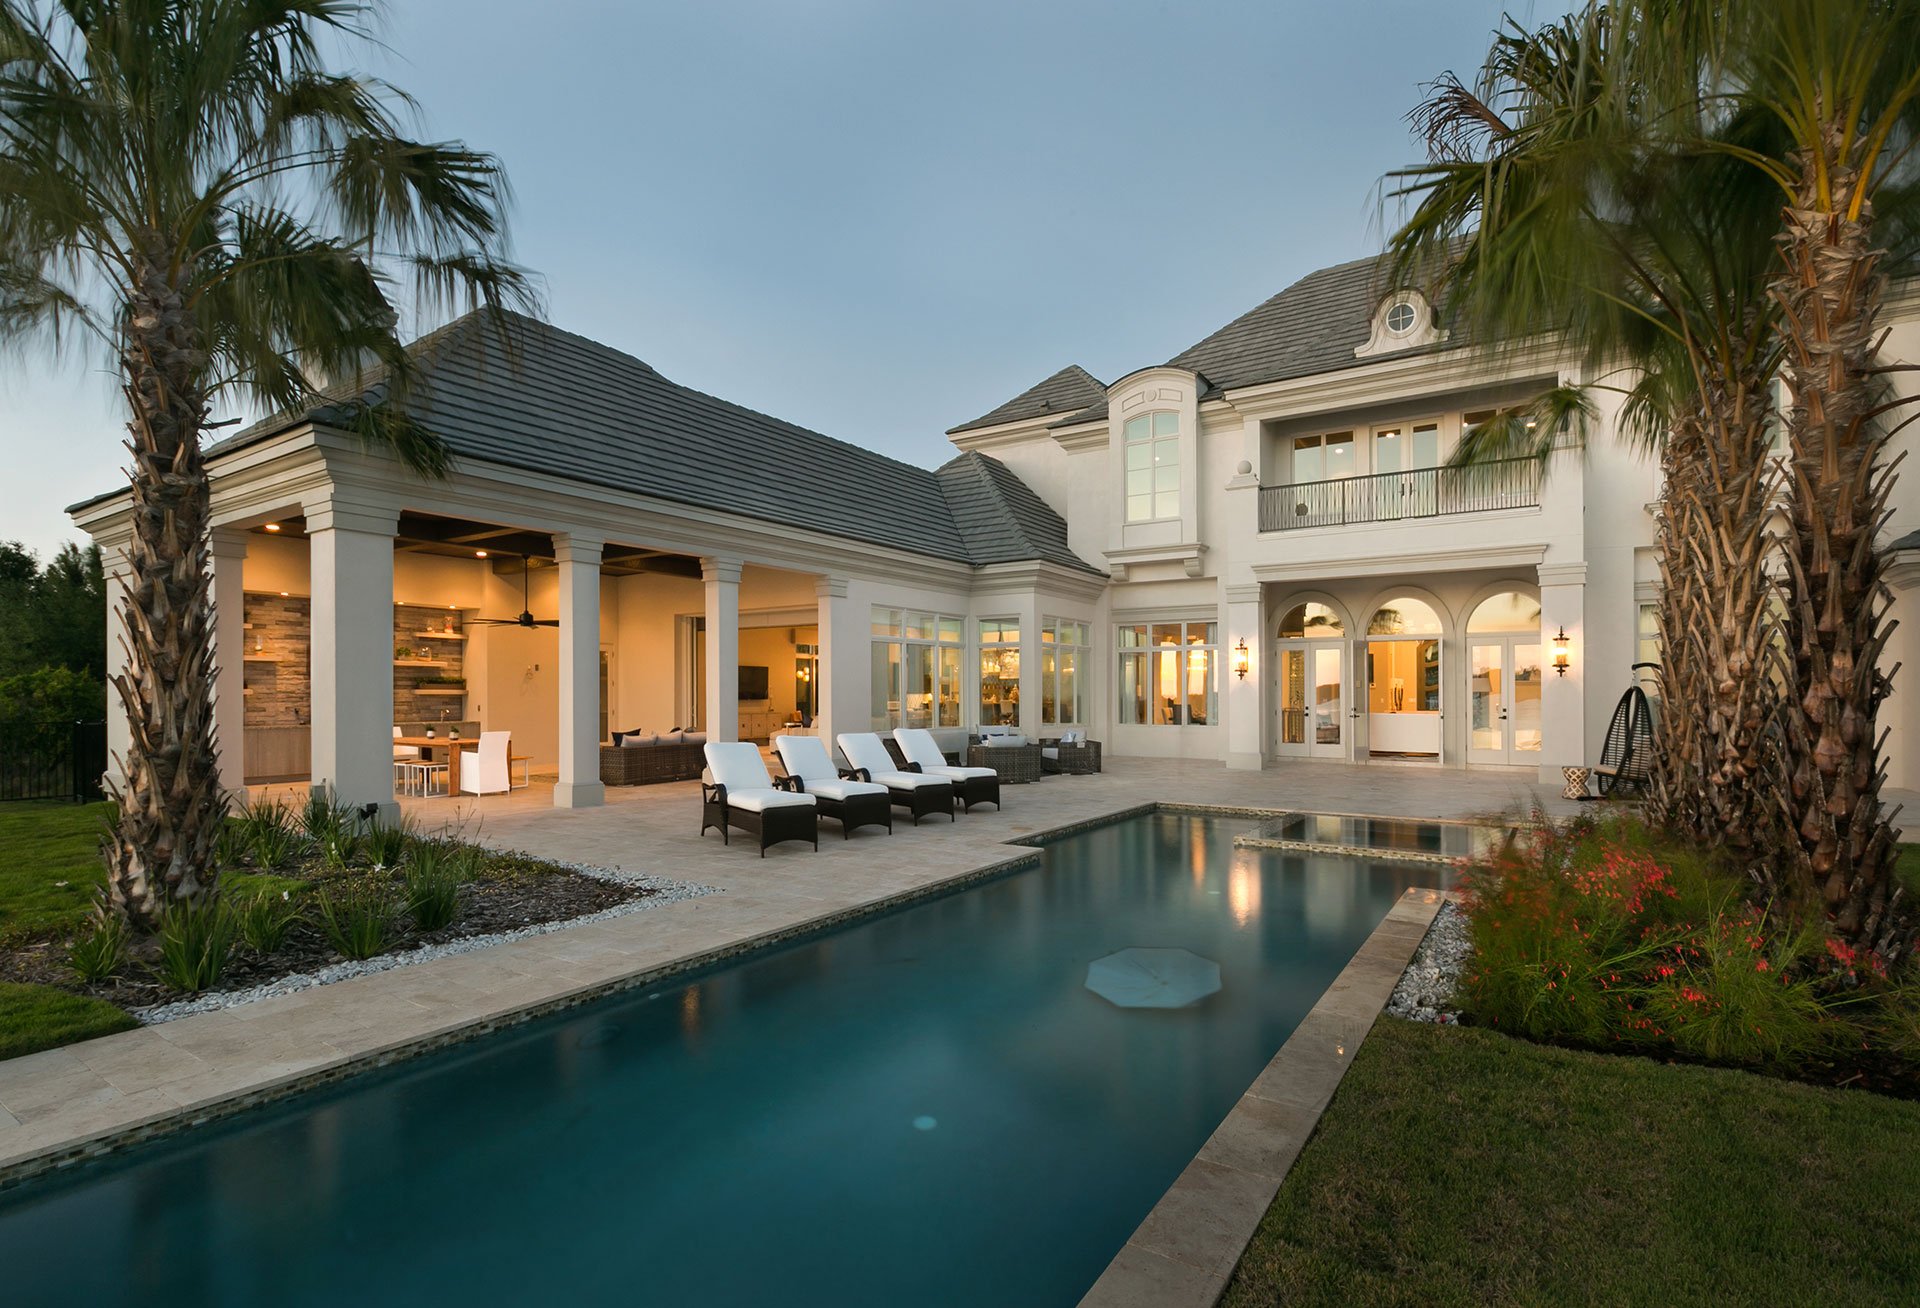 Orlando Real Estate Golf Course Homes for Sale Luxury Florida Homes Bella Collina